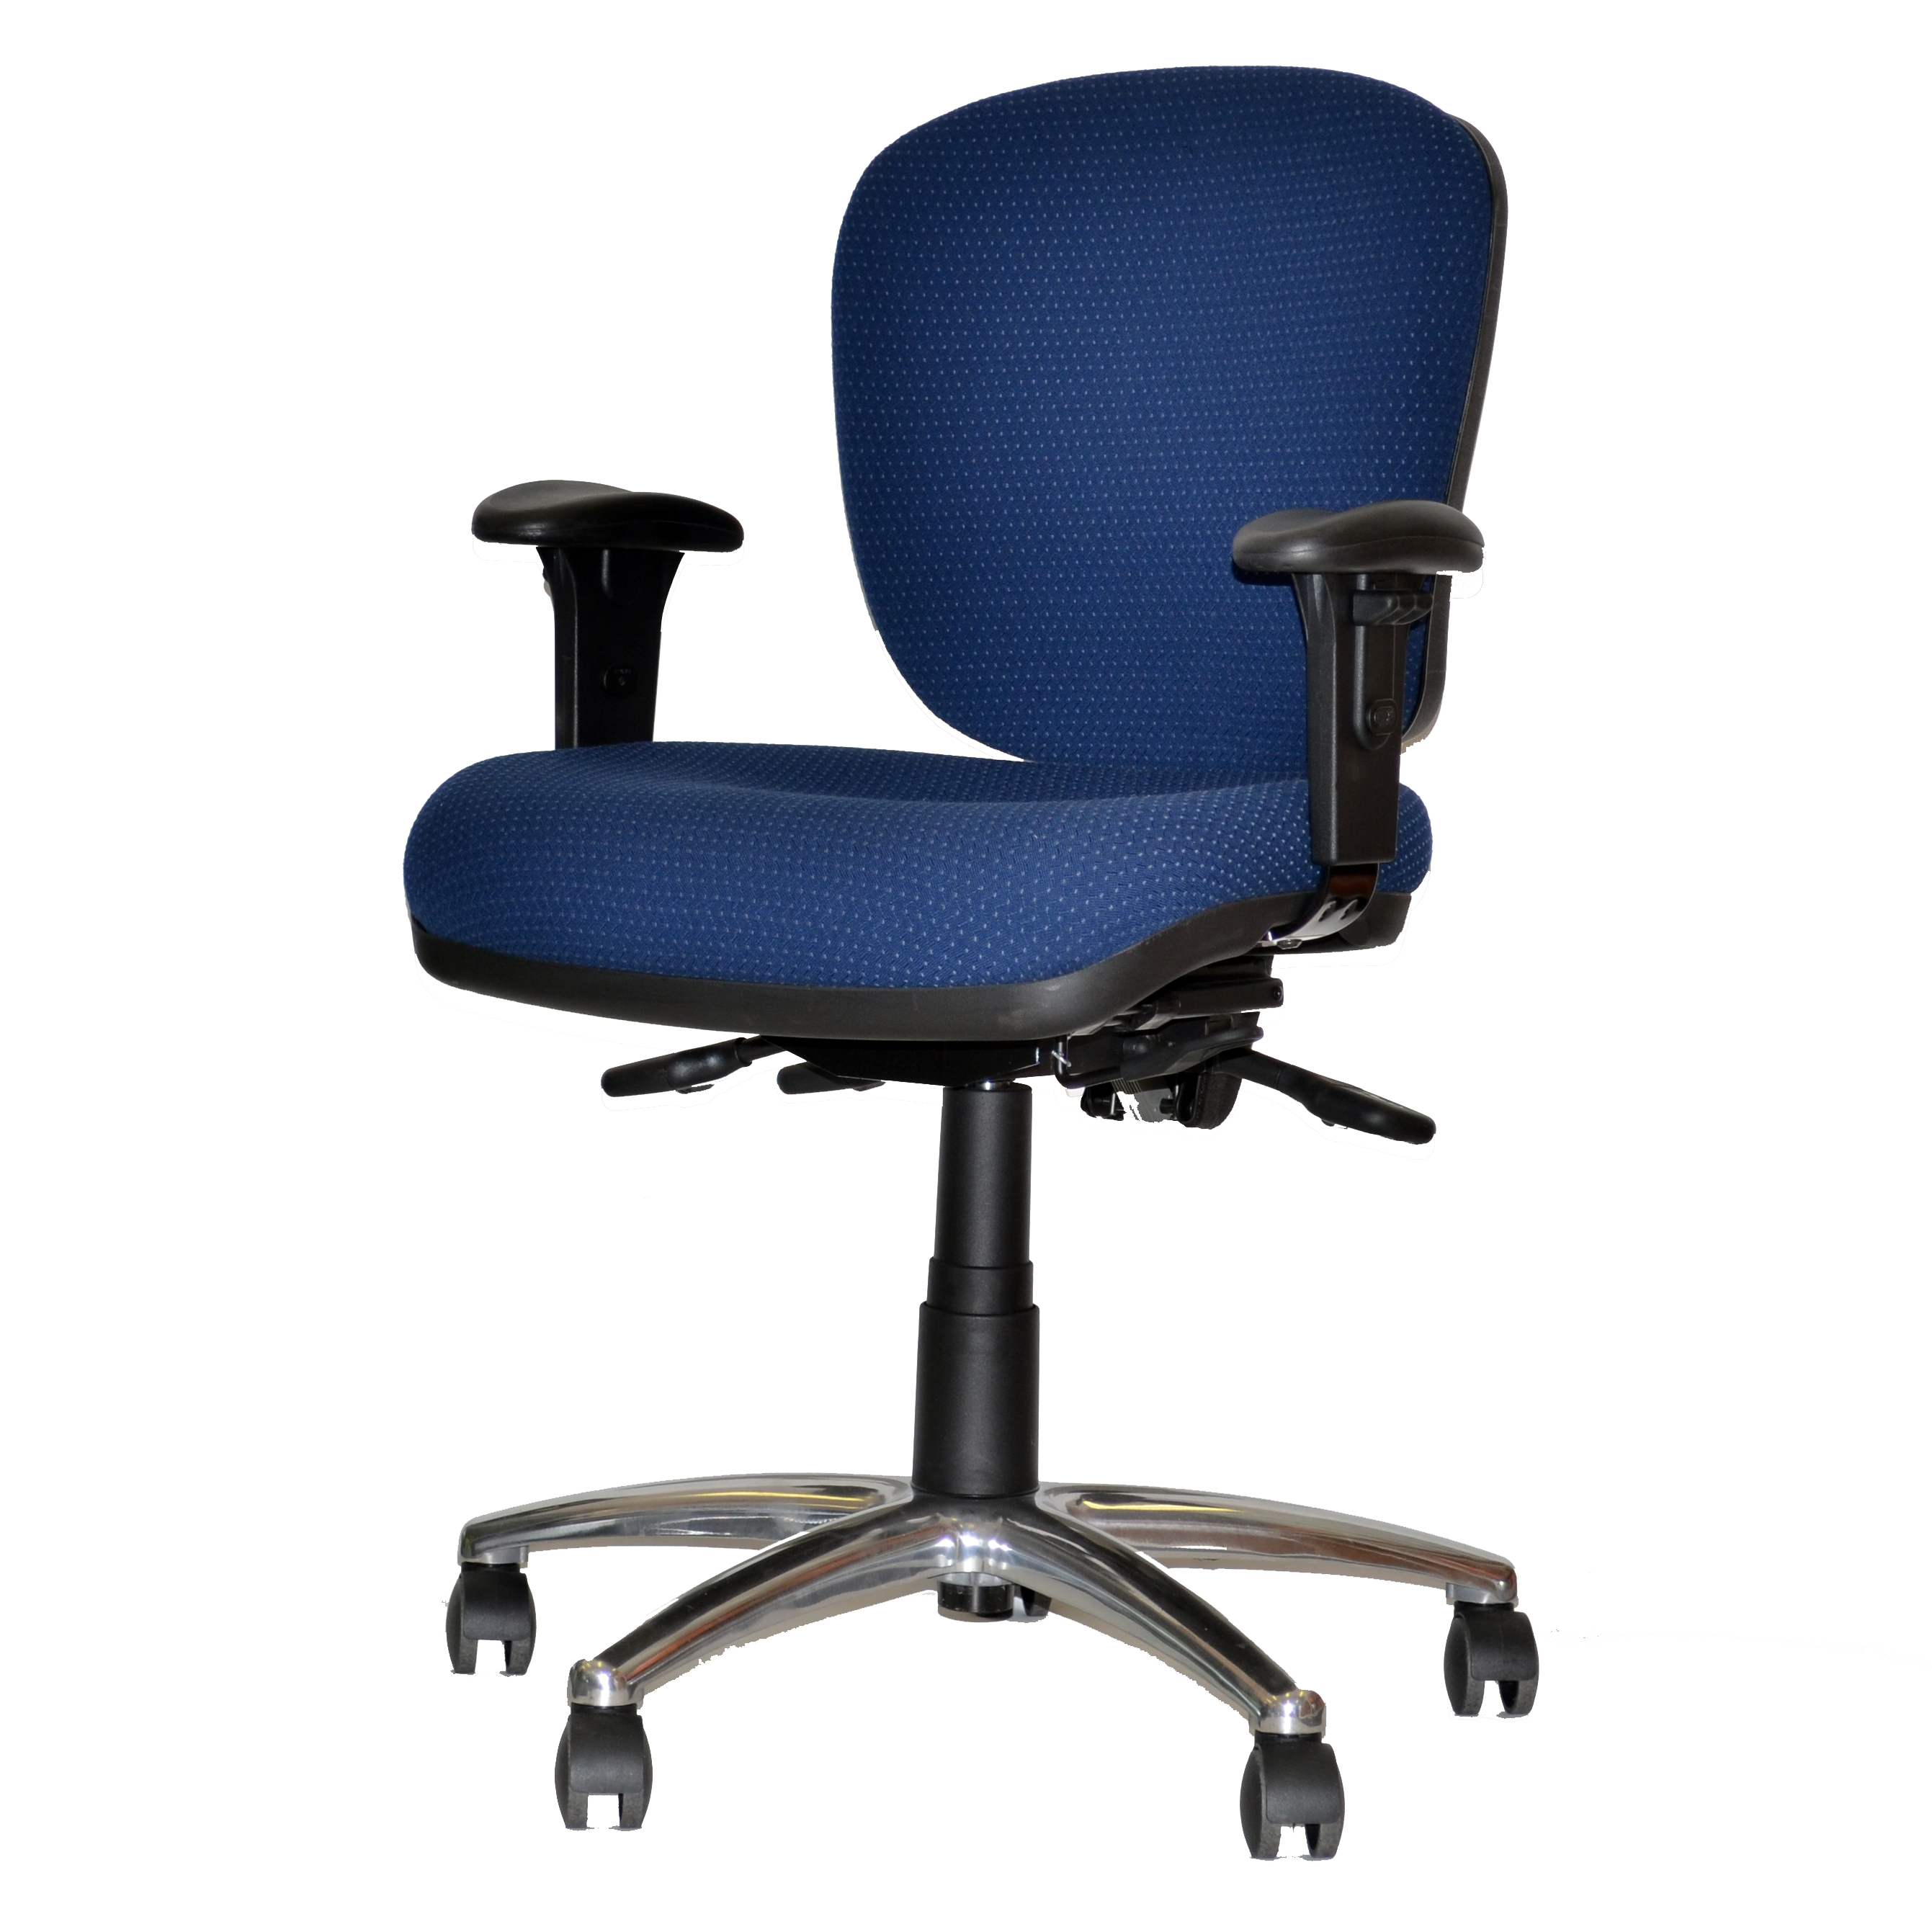 Ezone Chair by Direct Ergonomics